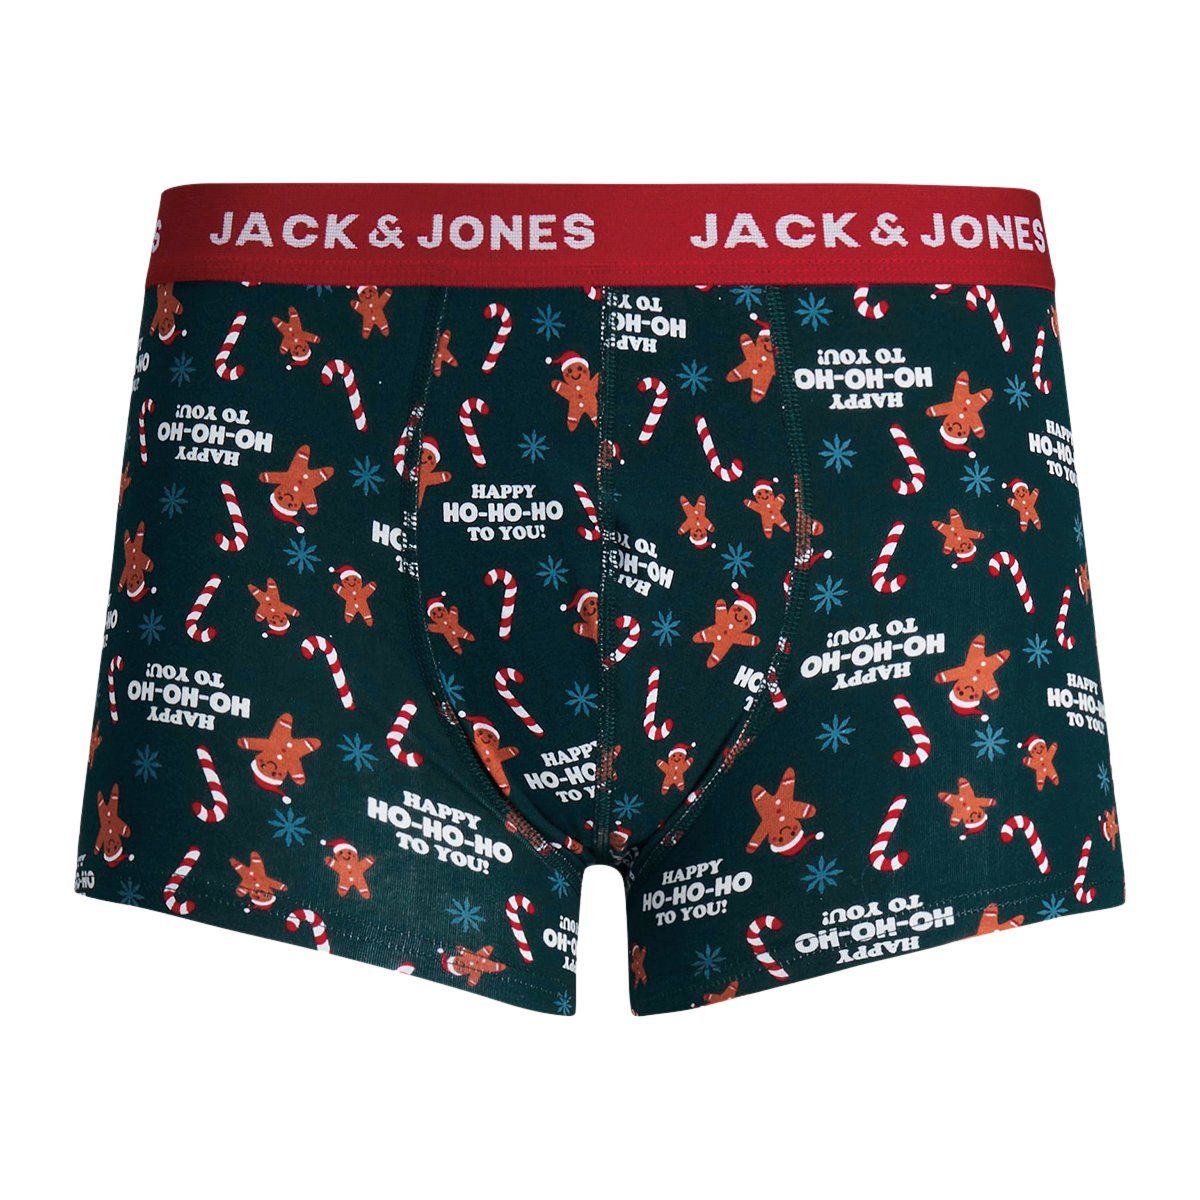 Wäsche/Bademode Boxershorts Jack & Jones Plus Boxershorts Übergrößen Herren Xmas Pants 3er-Pack weinrot/grün Jack & Jones (3 Stü